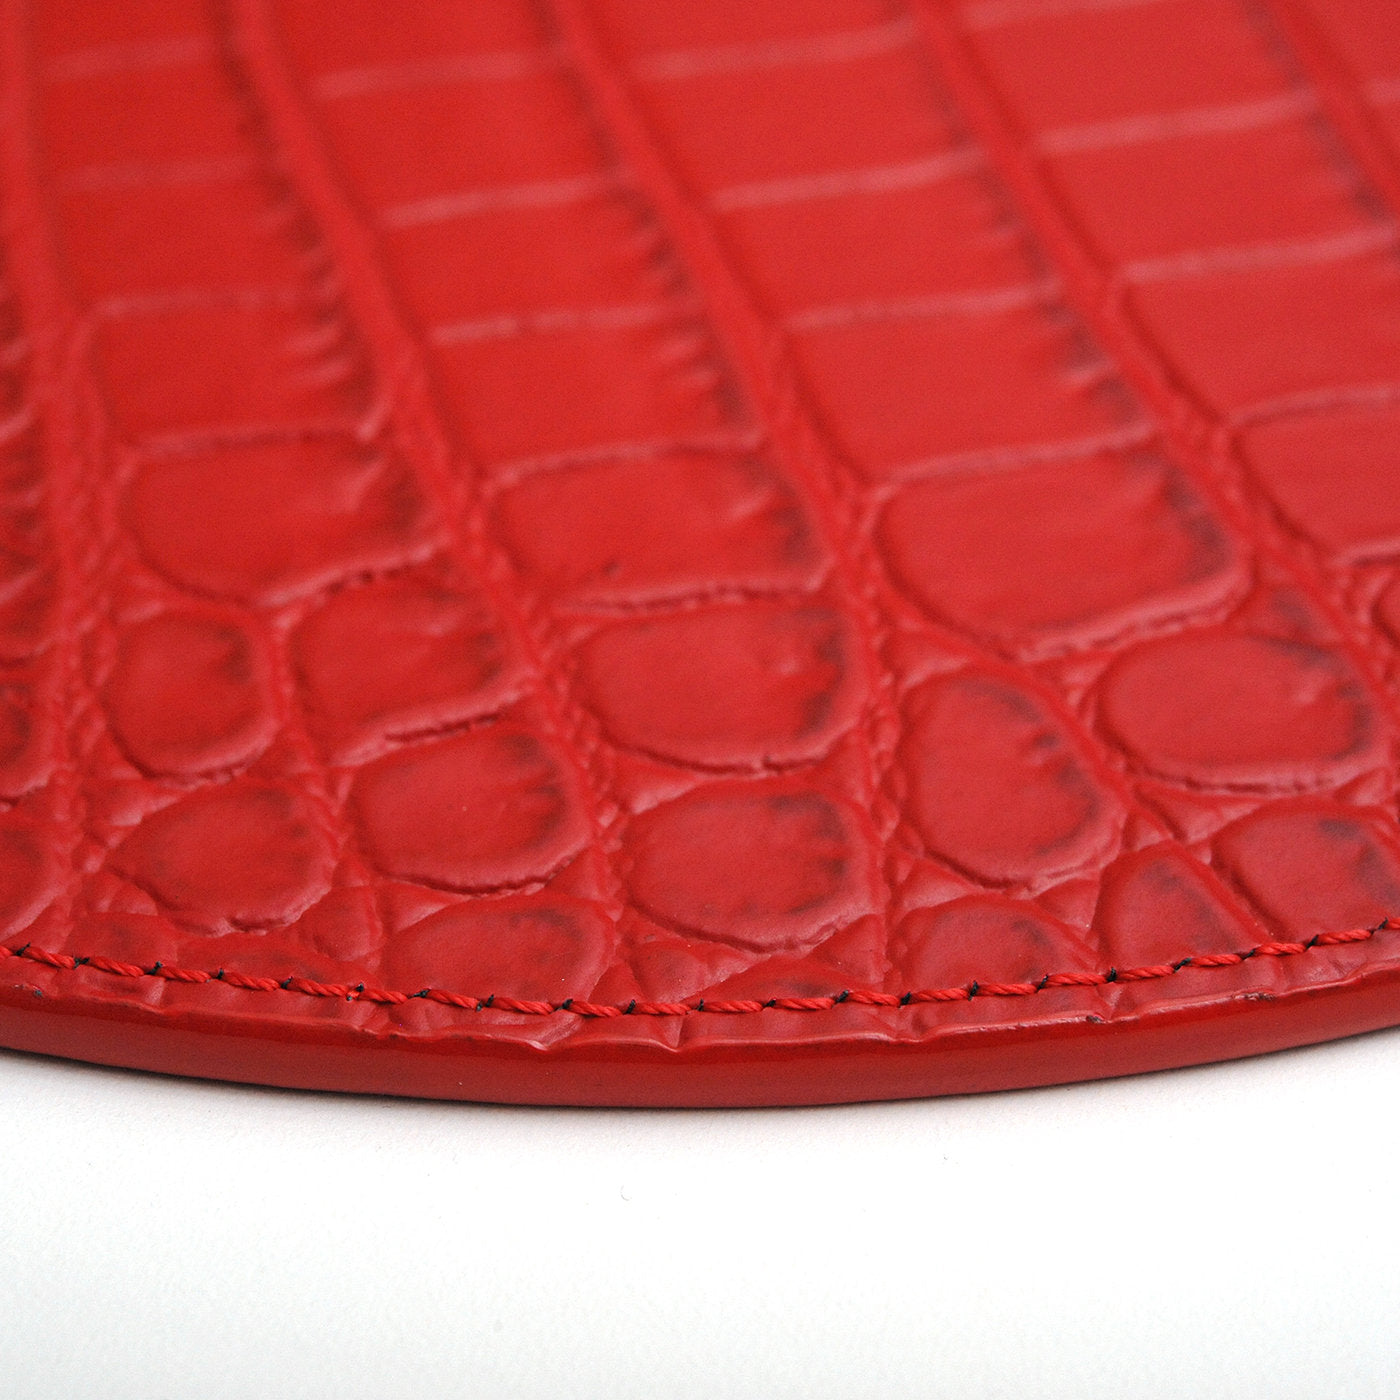 Kenya Medium Set of 2 Red Leather Placemats - Alternative view 3